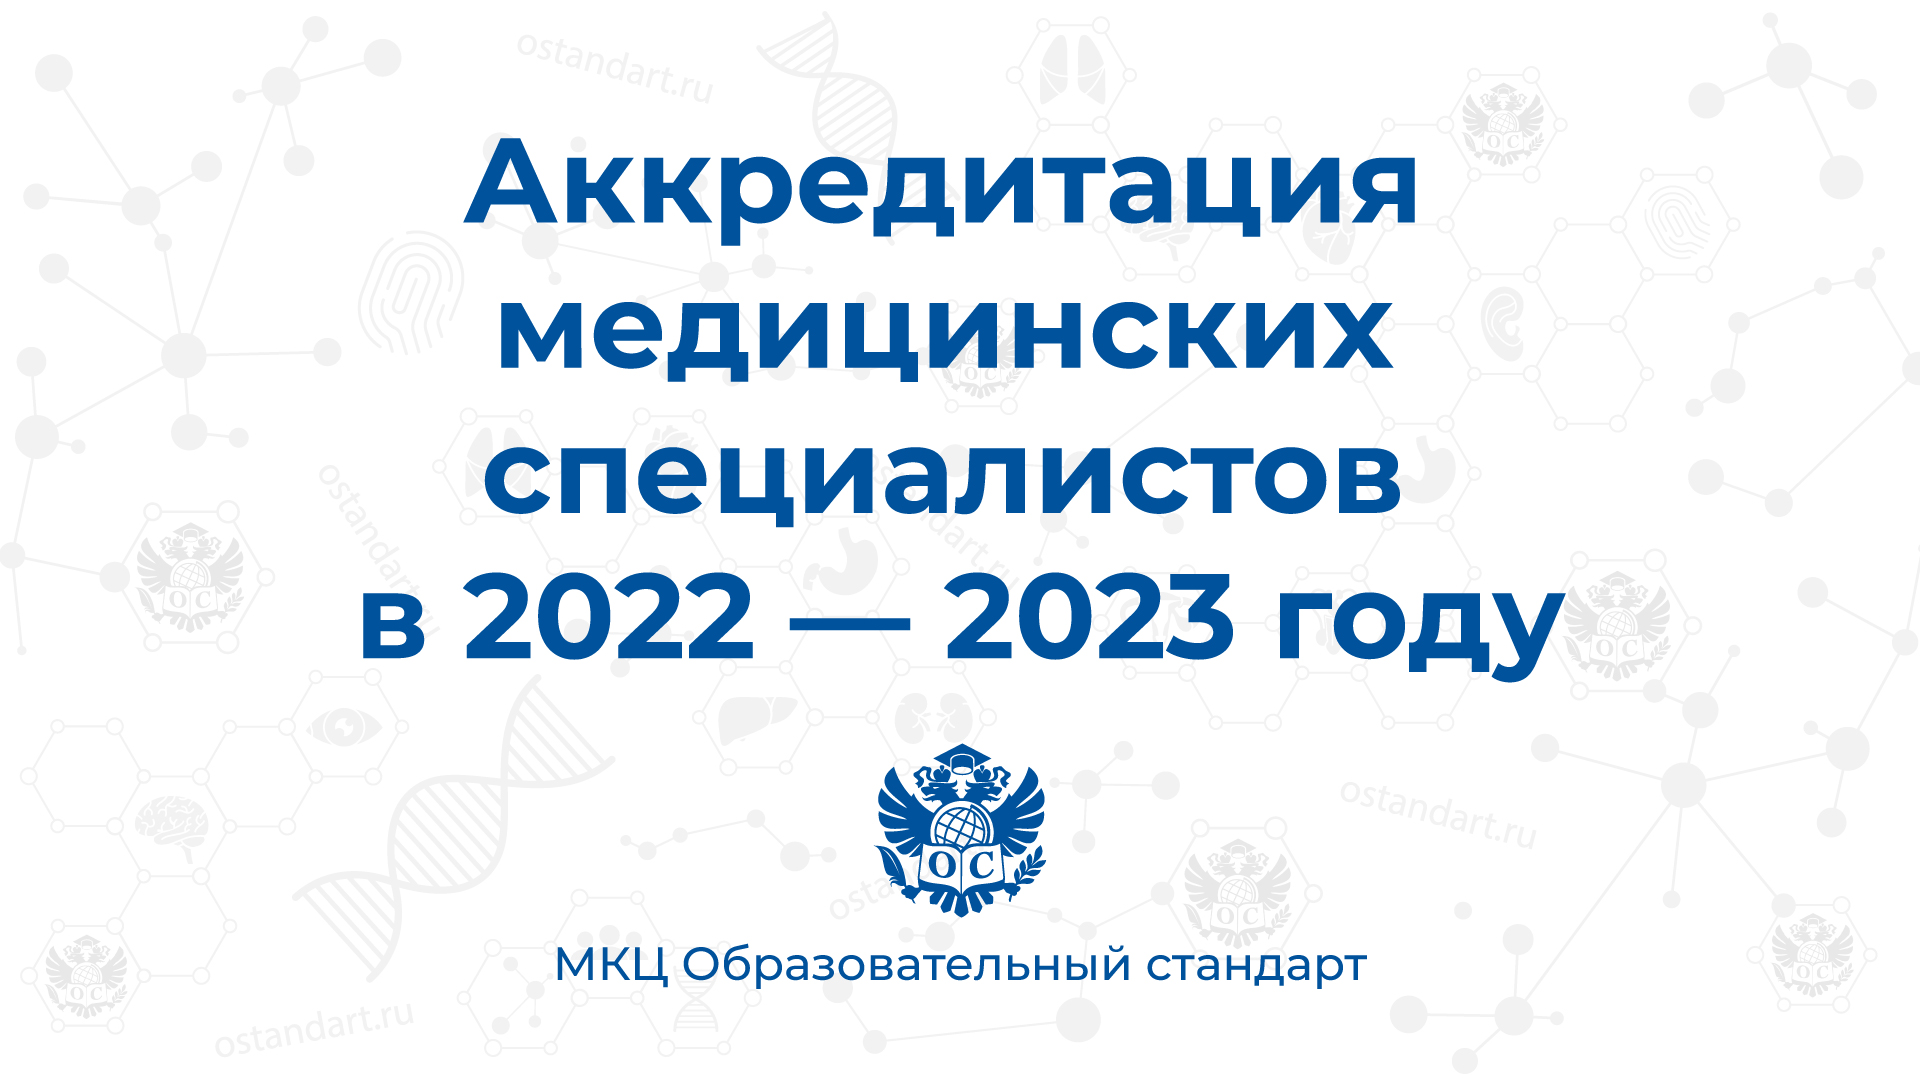 аккредитация медицинских специалистов 2022 - 2023